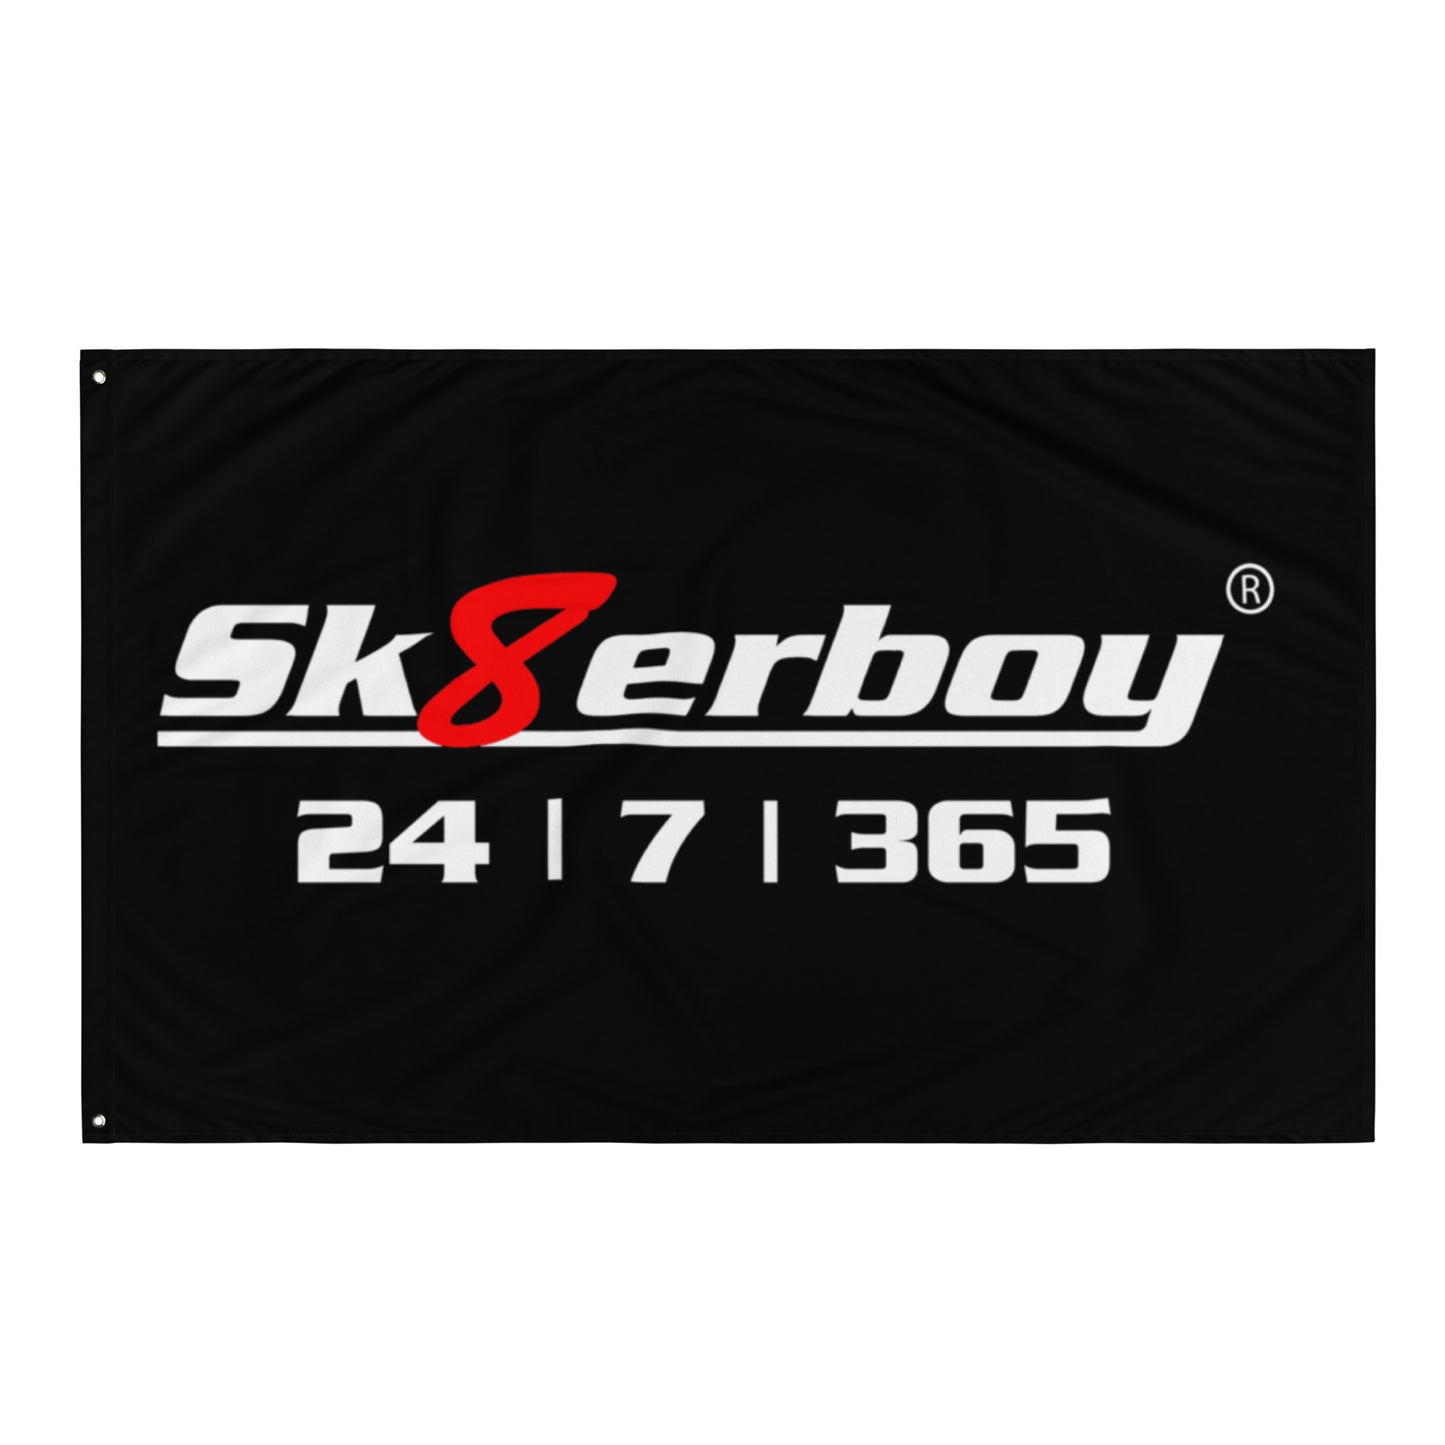 Sk8erboy® 24 | 7 | 365 flag